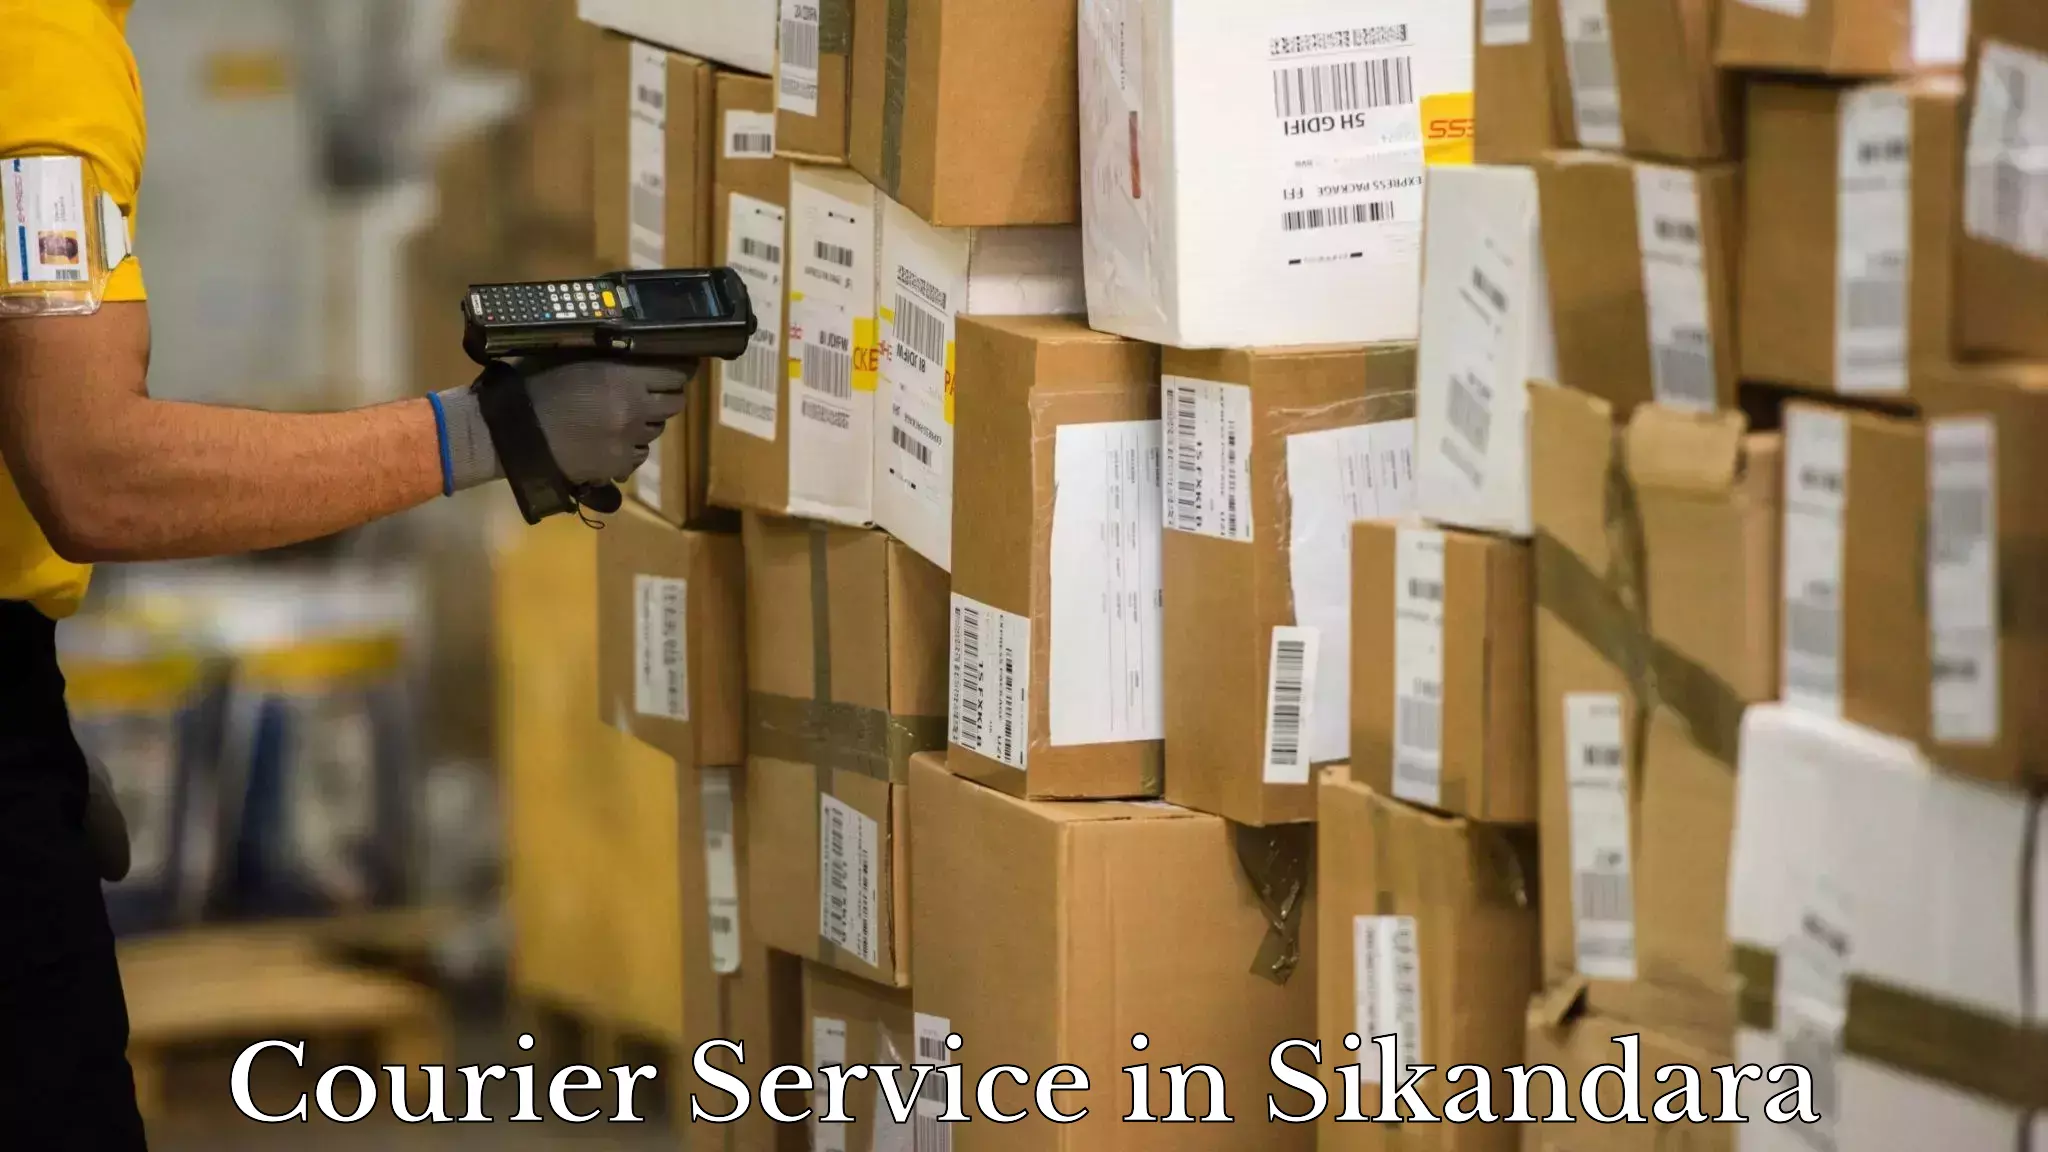 Efficient cargo handling in Sikandara